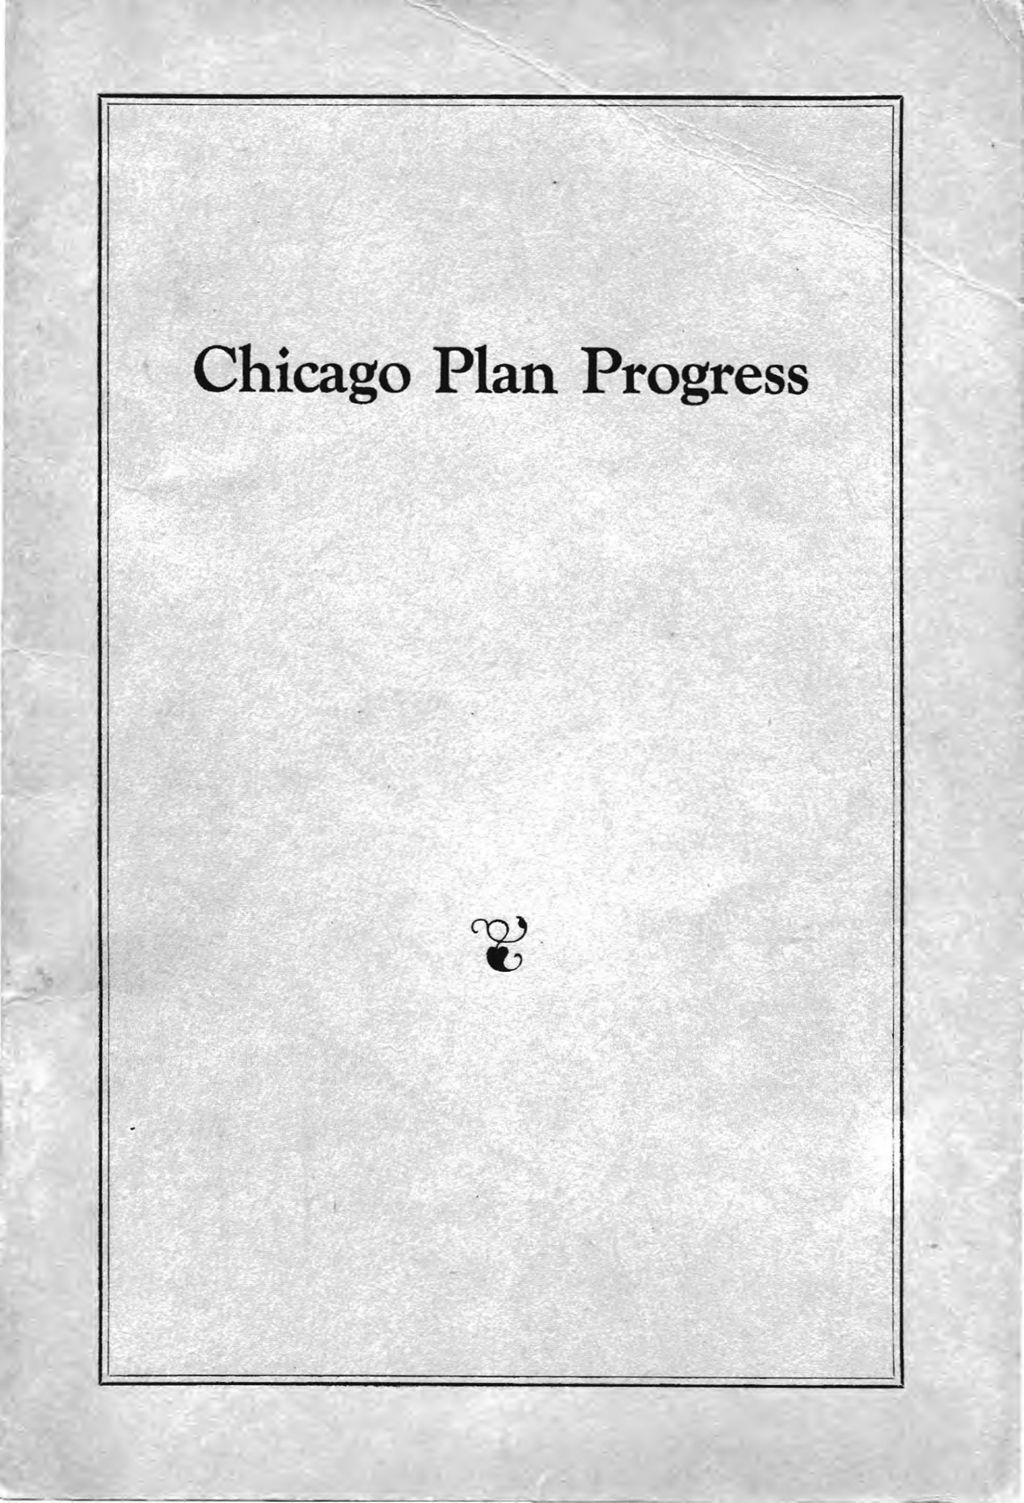 Miniature of Chicago Plan Progress, Chicago Plan Commission, 1927.